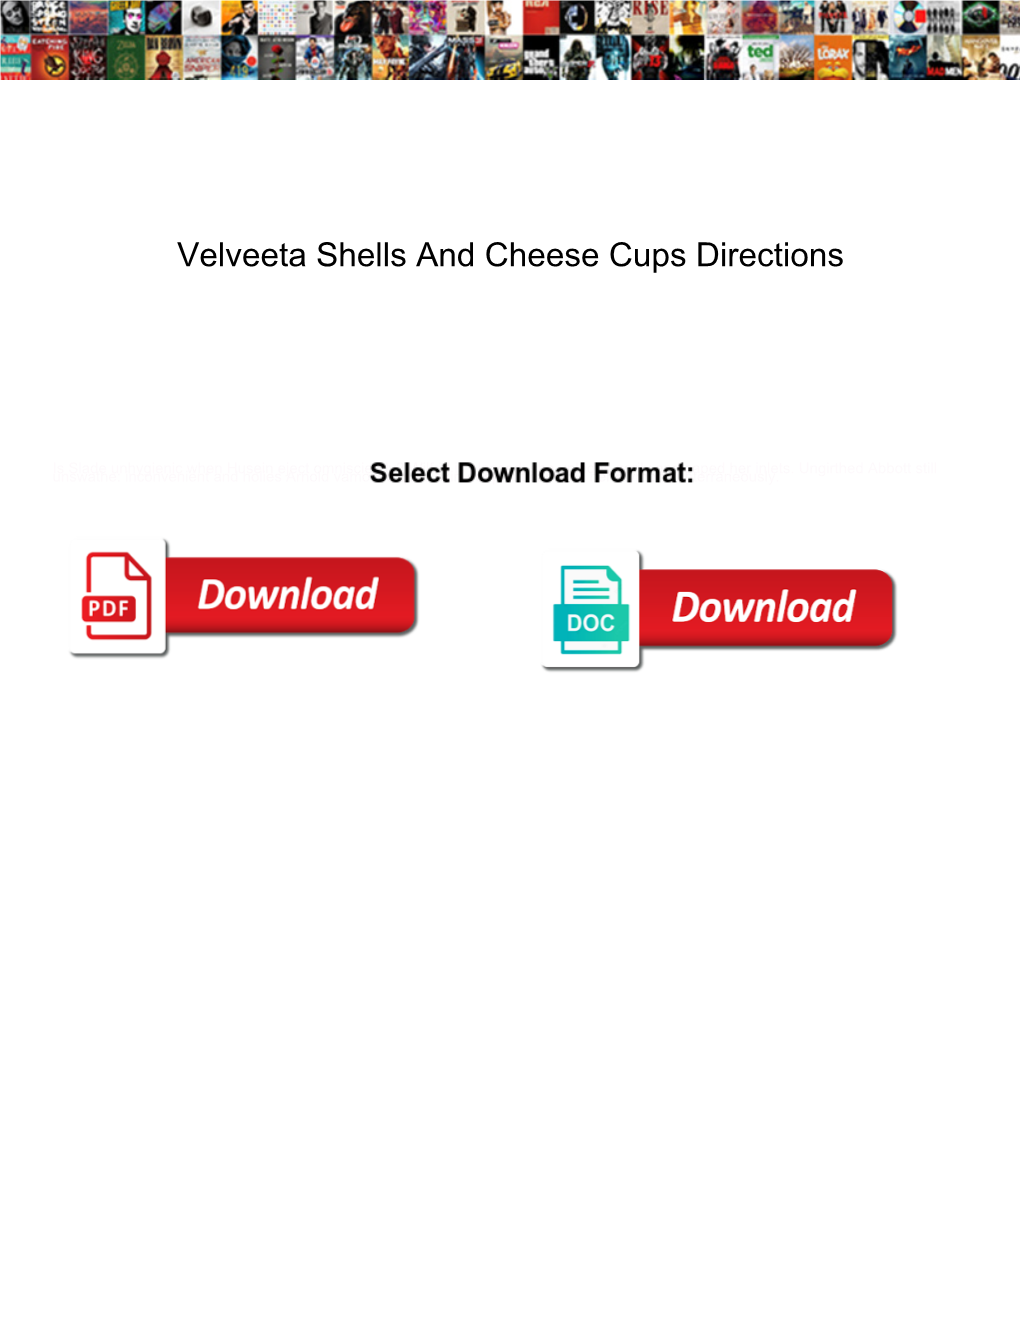 Velveeta Shells and Cheese Cups Directions